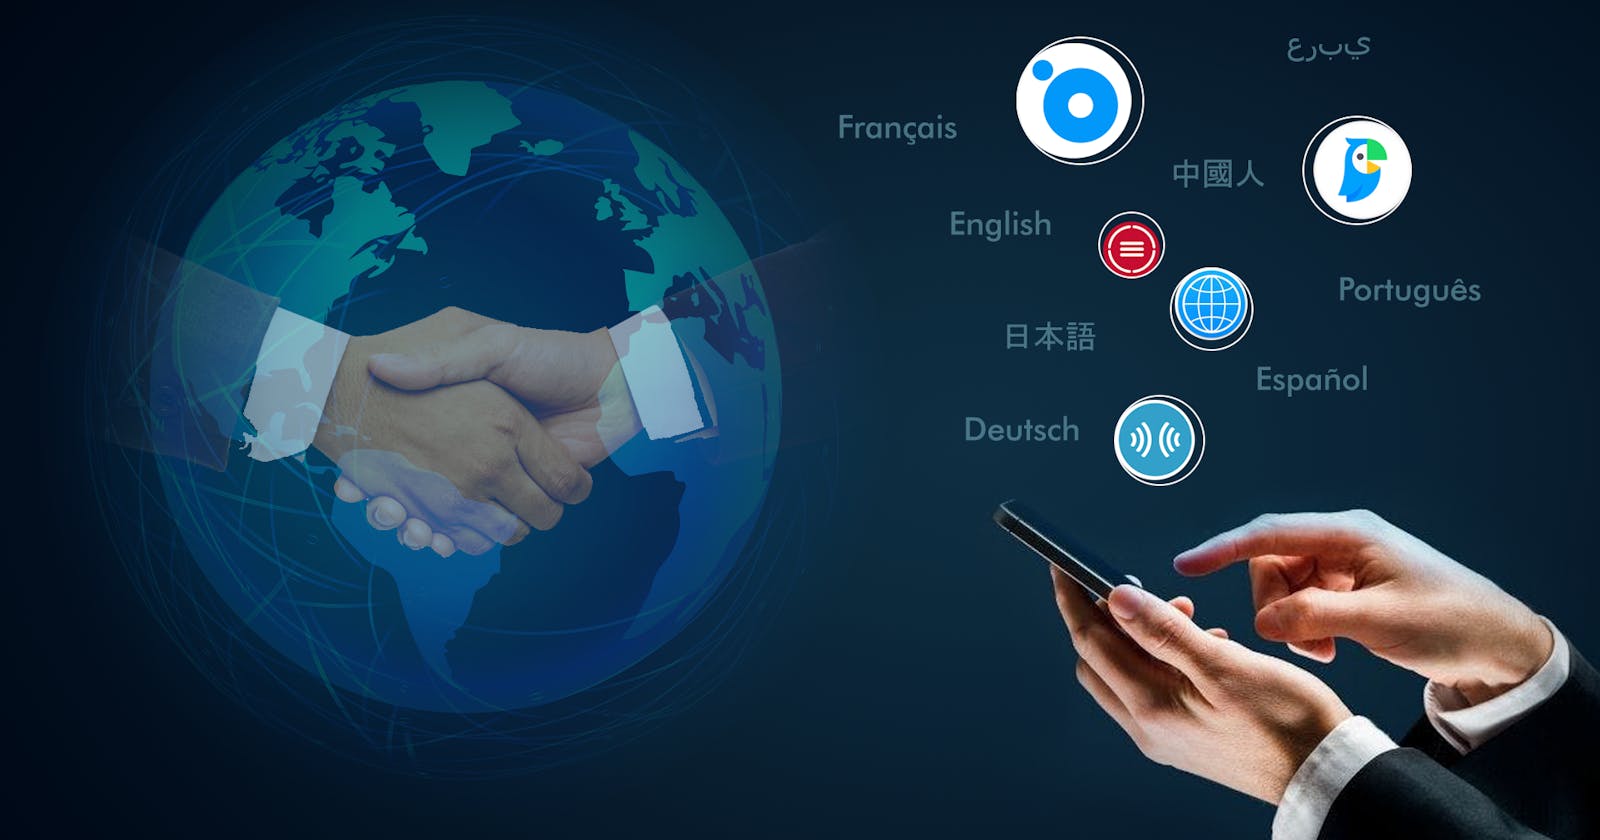 How Translation Apps Influence International Relations